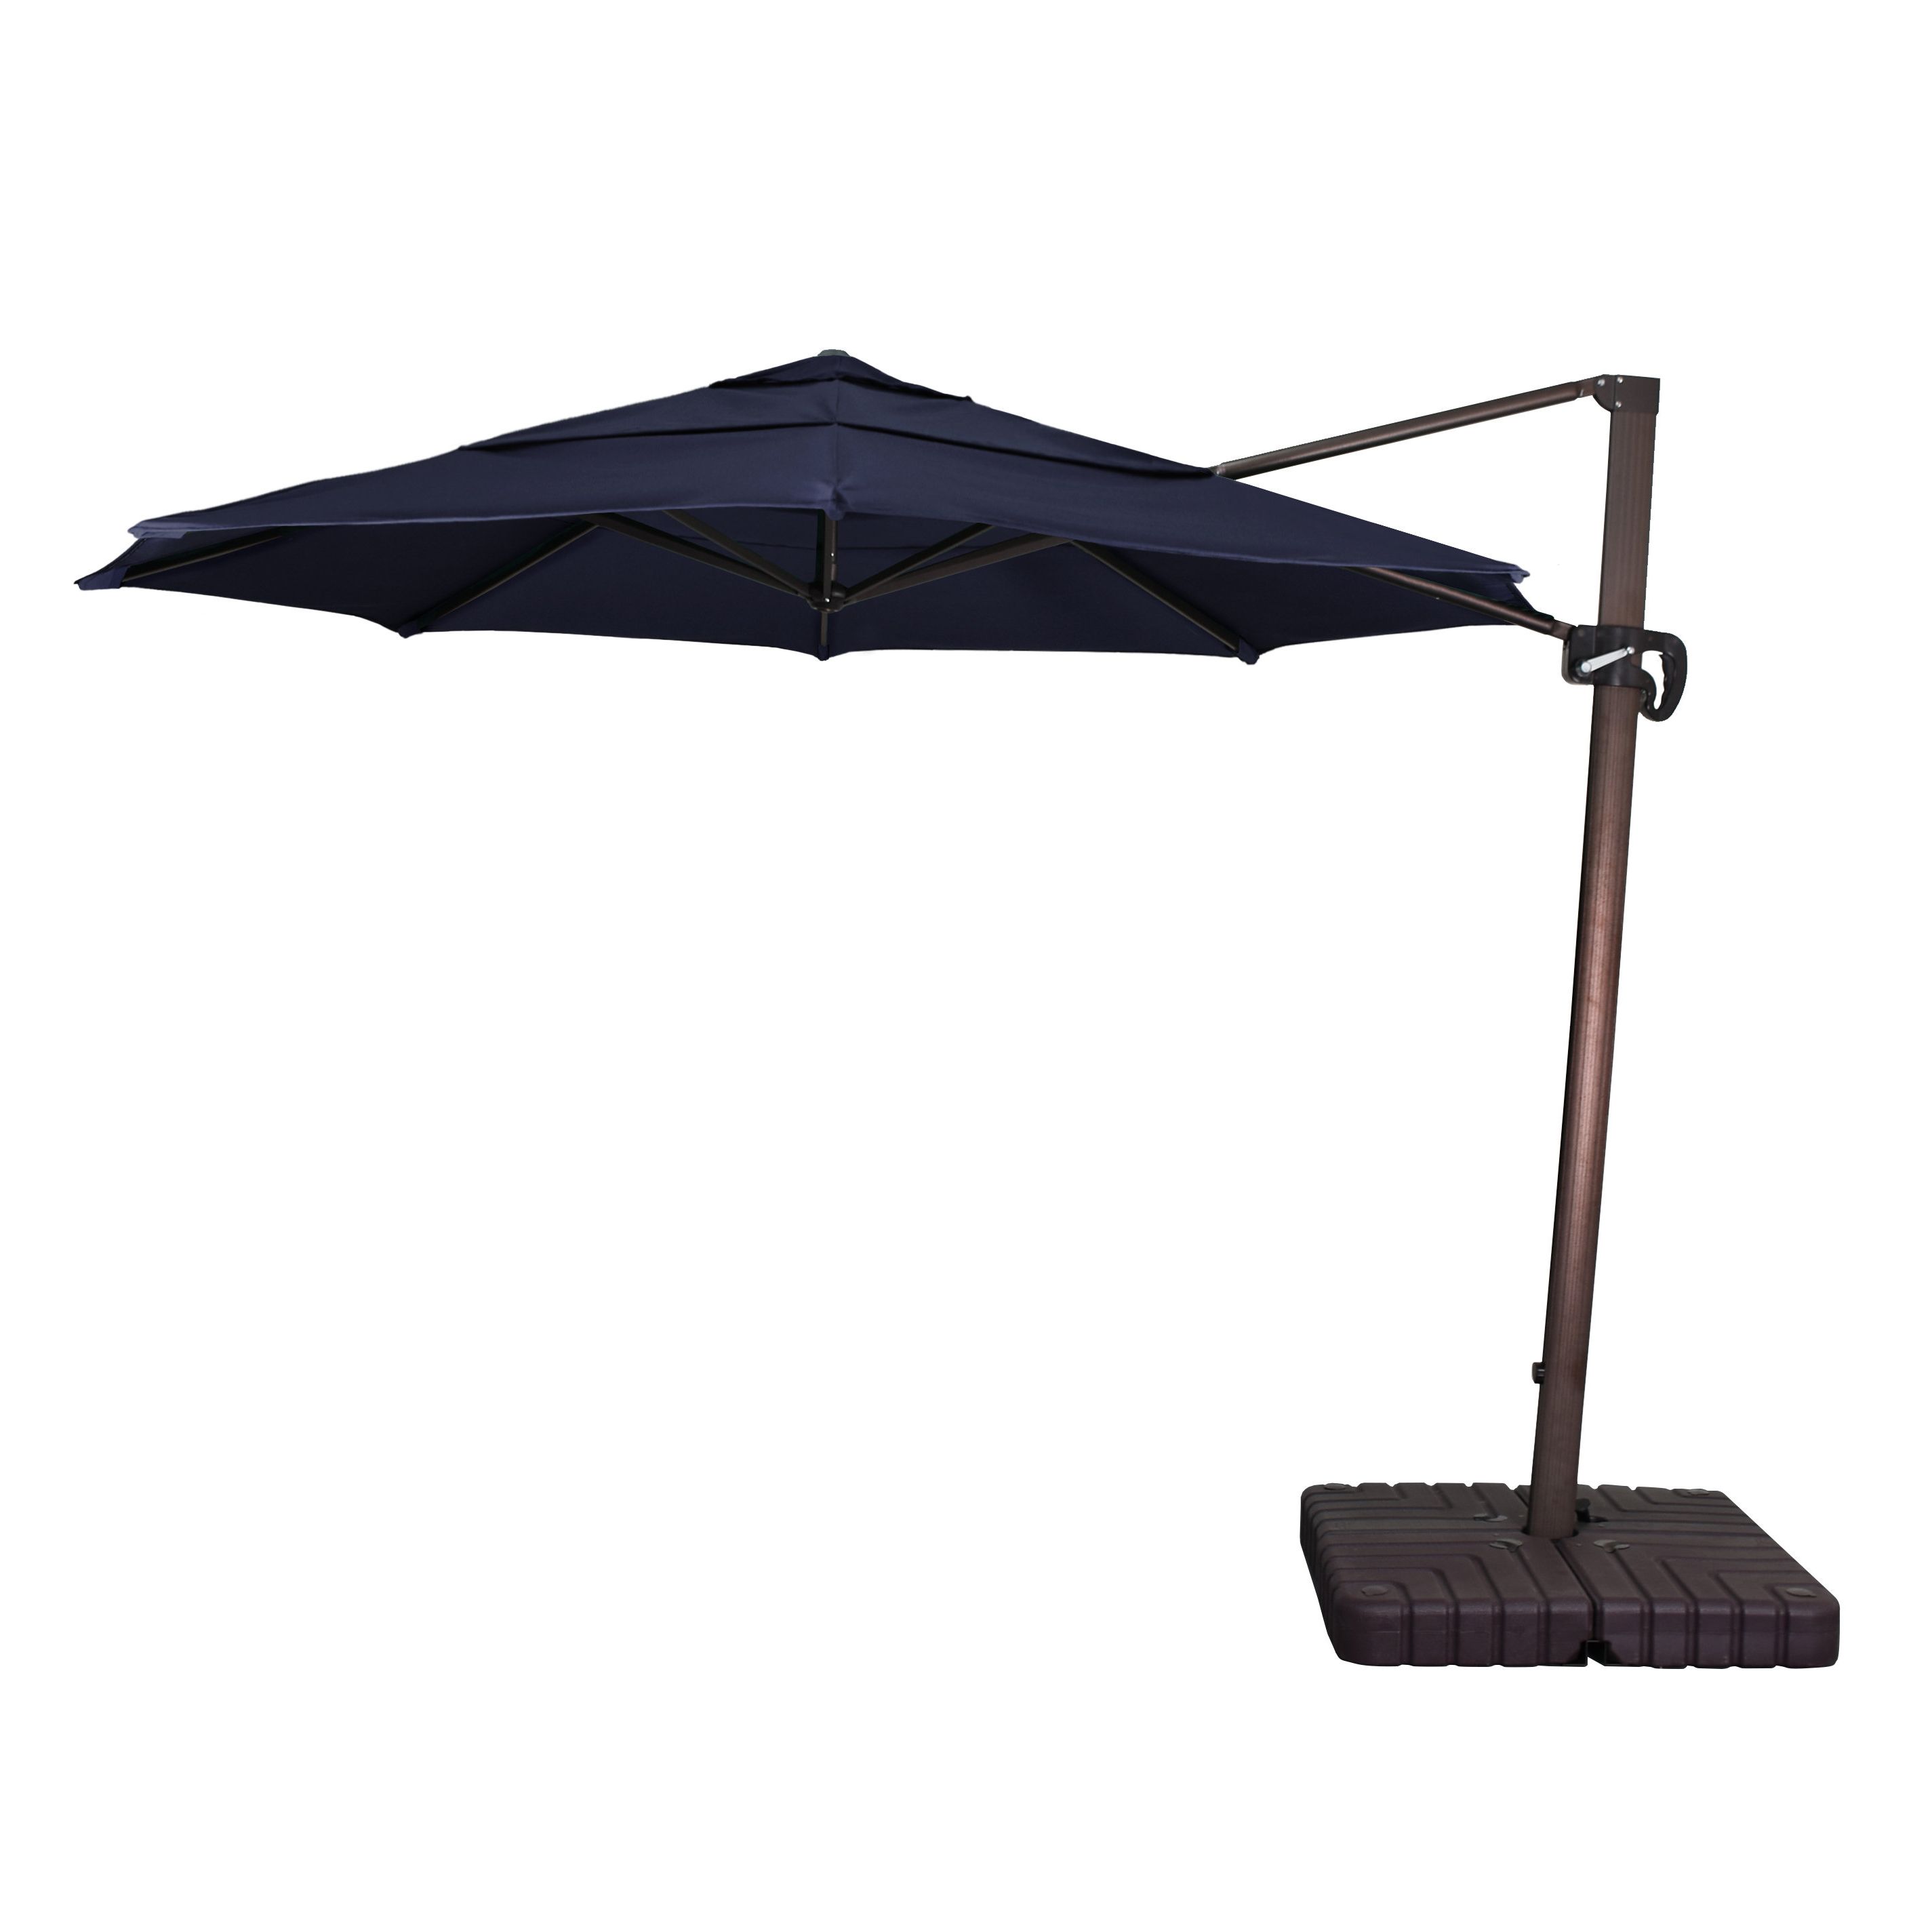 Bondi Square Cantilever Umbrellas Intended For Popular Carlisle 11' Cantilever Sunbrella Umbrella (View 18 of 20)